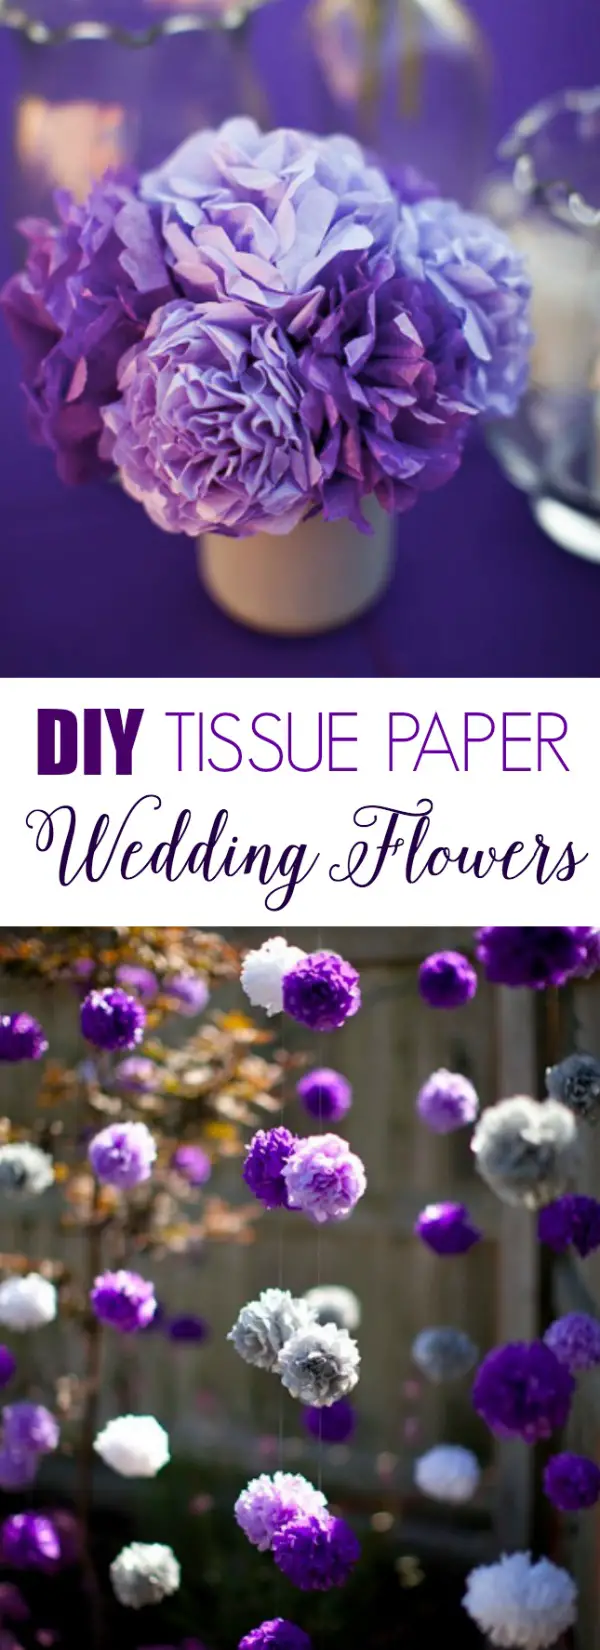 diy tissue paper wedding flowers